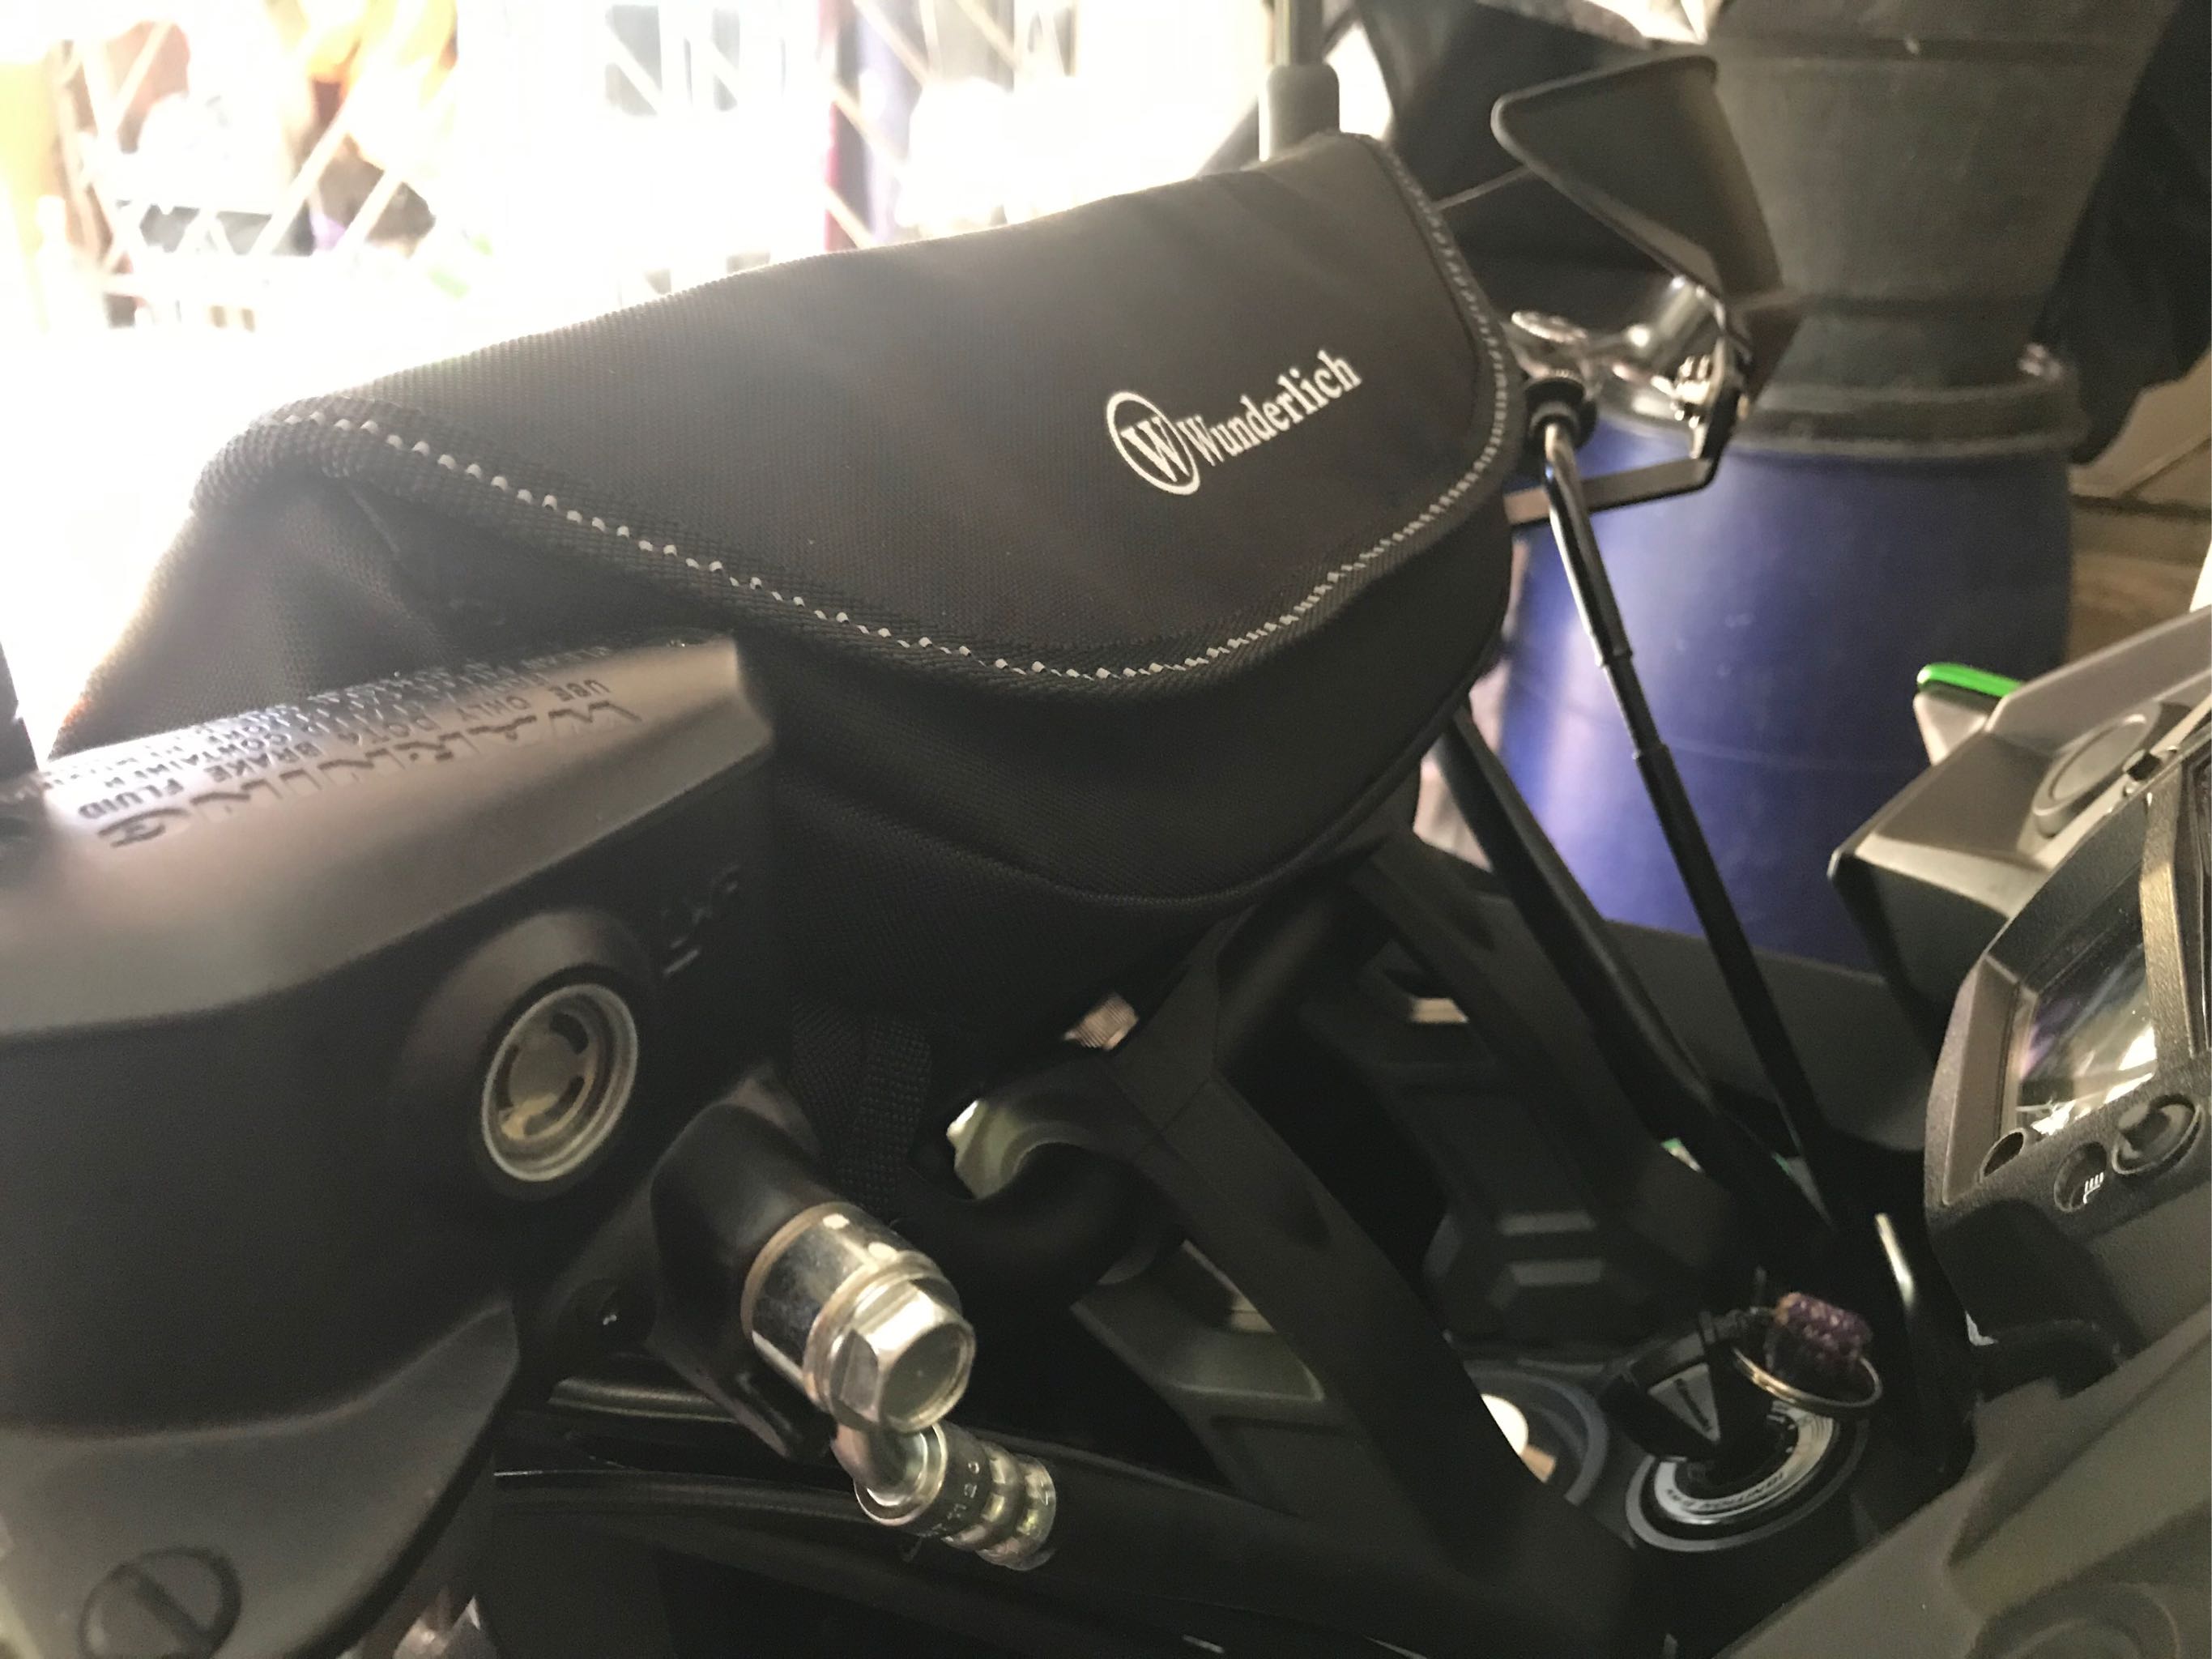 Katigan Motorcycle Handlebar Bag Magnetic Tank Bike Saddle Bag for Big Screen Phone/GPS for R1200GS F800GS ADV F700GS R1250GS for Ducati Triumph 